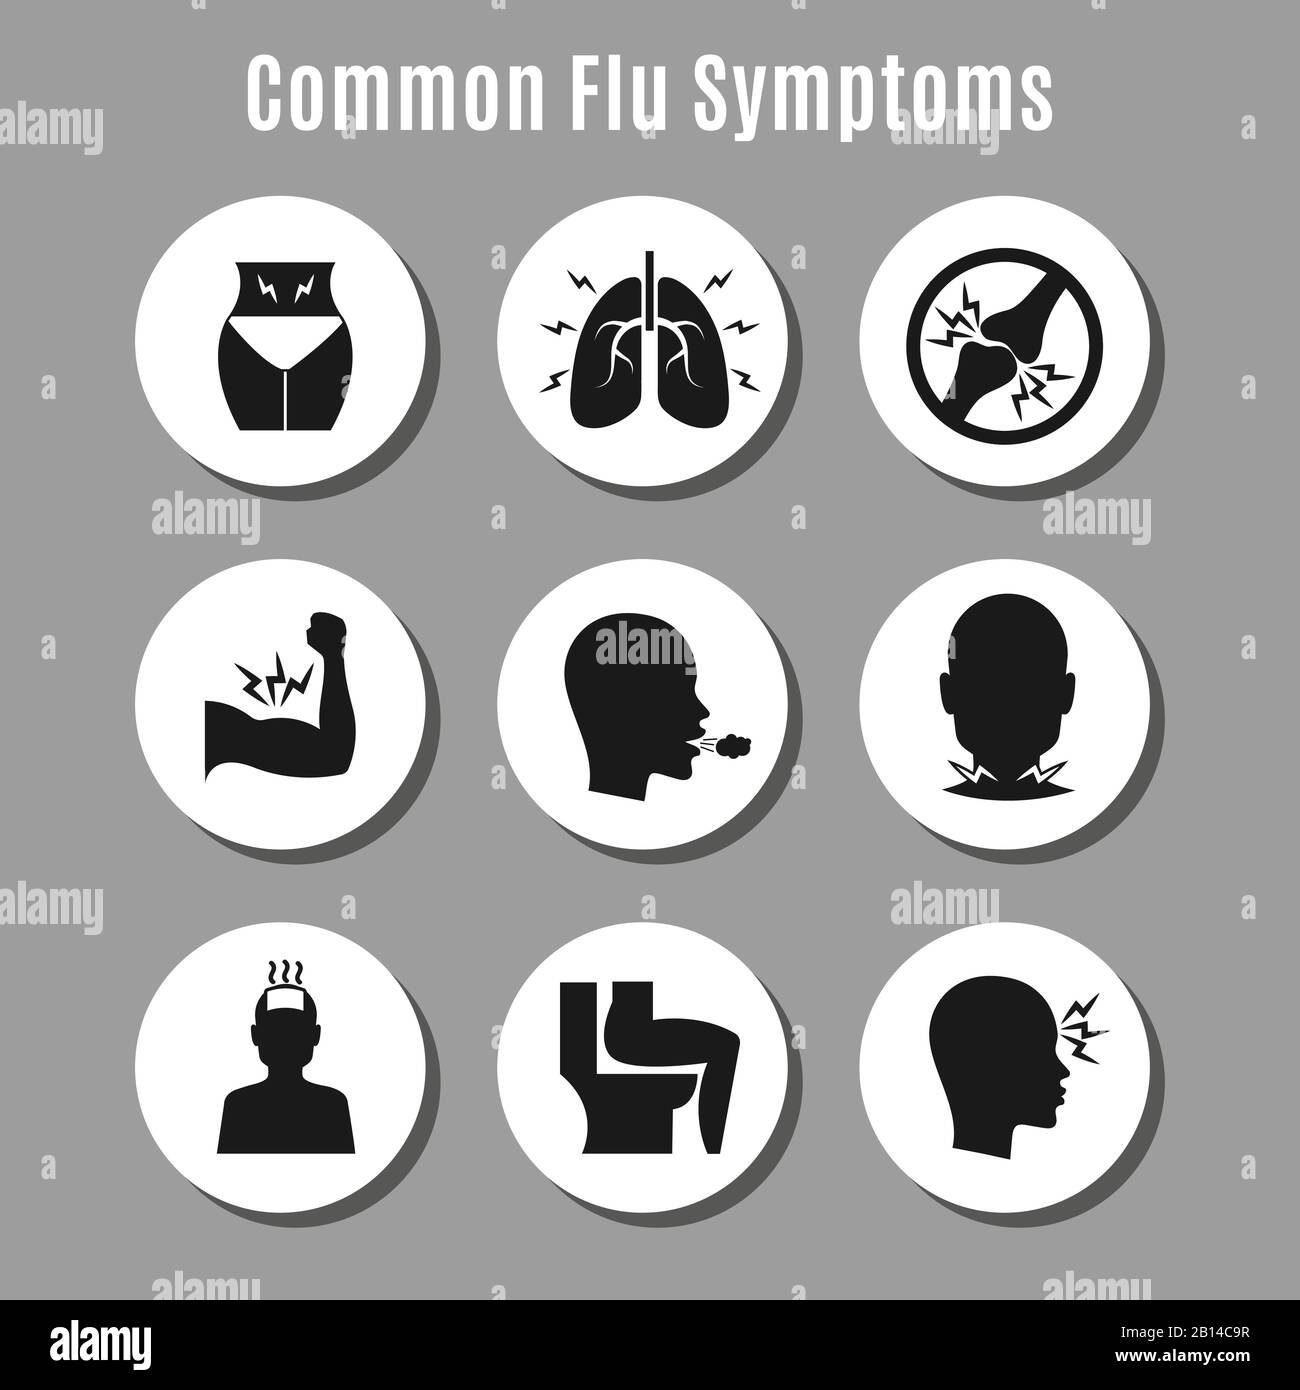 Flu influenza sickness symptoms icons on circles. Vector flat illustration Stock Vector